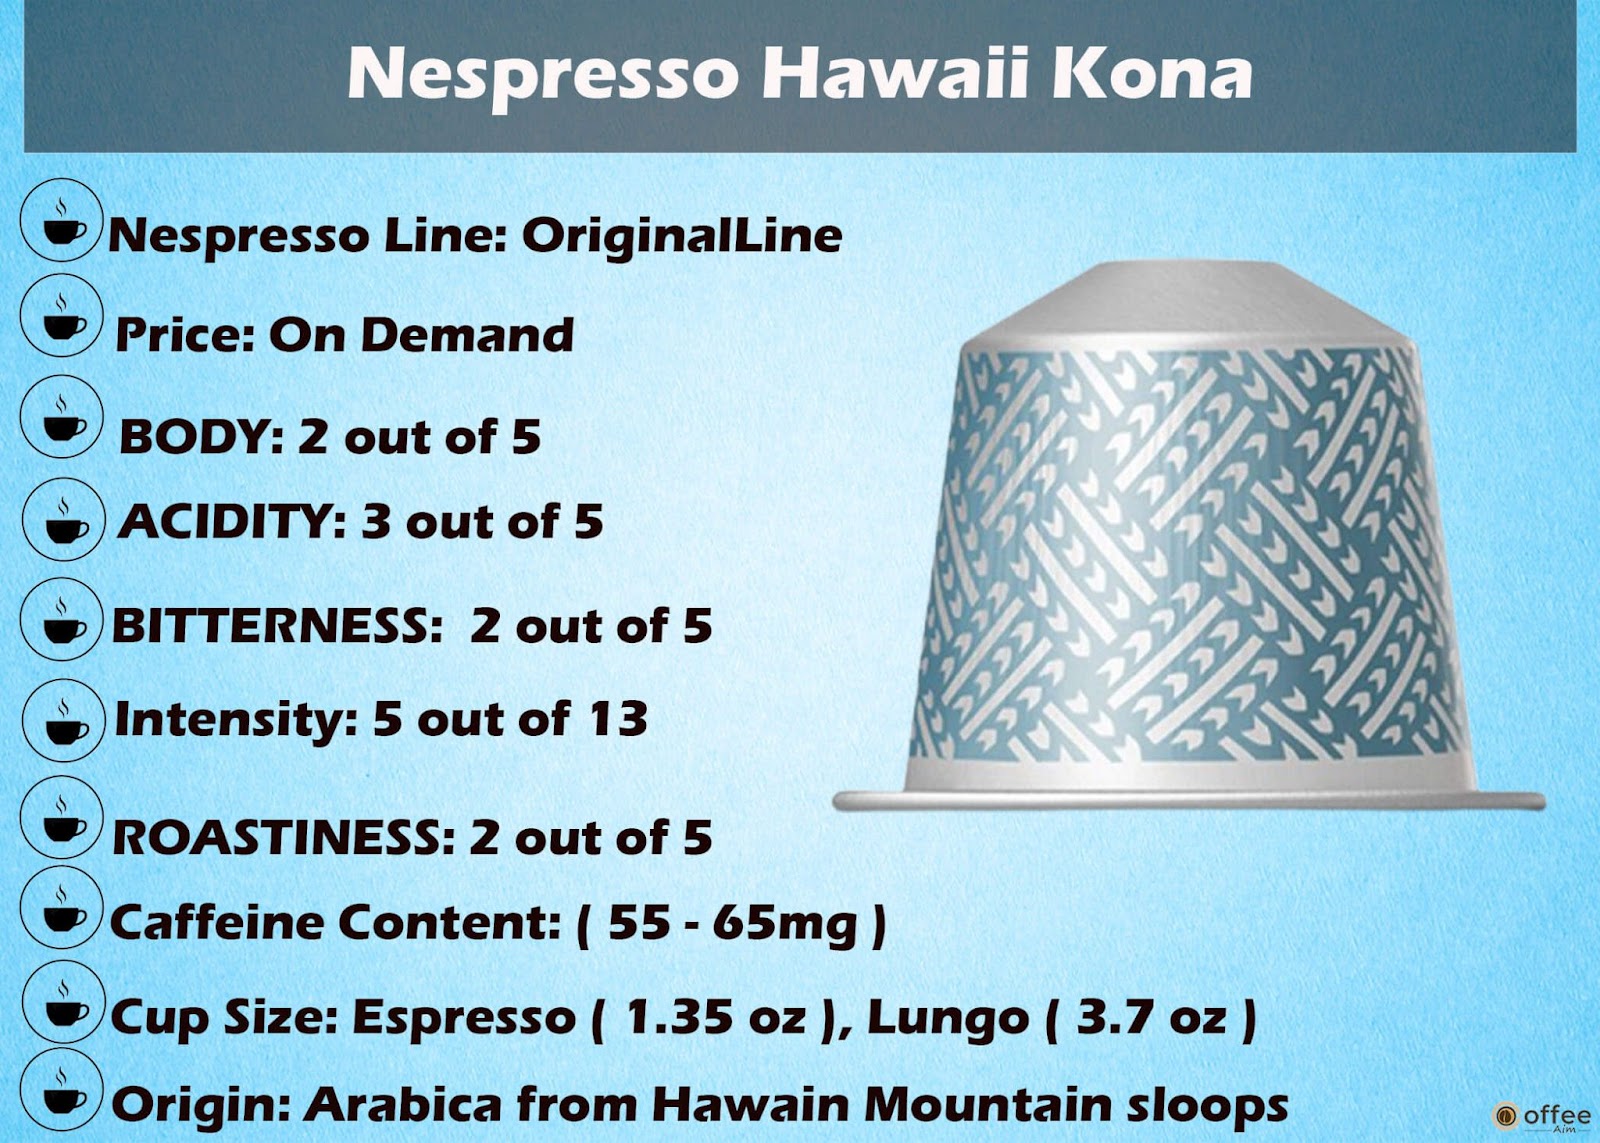 Features Chart of Nespresso Hawaii Kona Original Line Capsule.